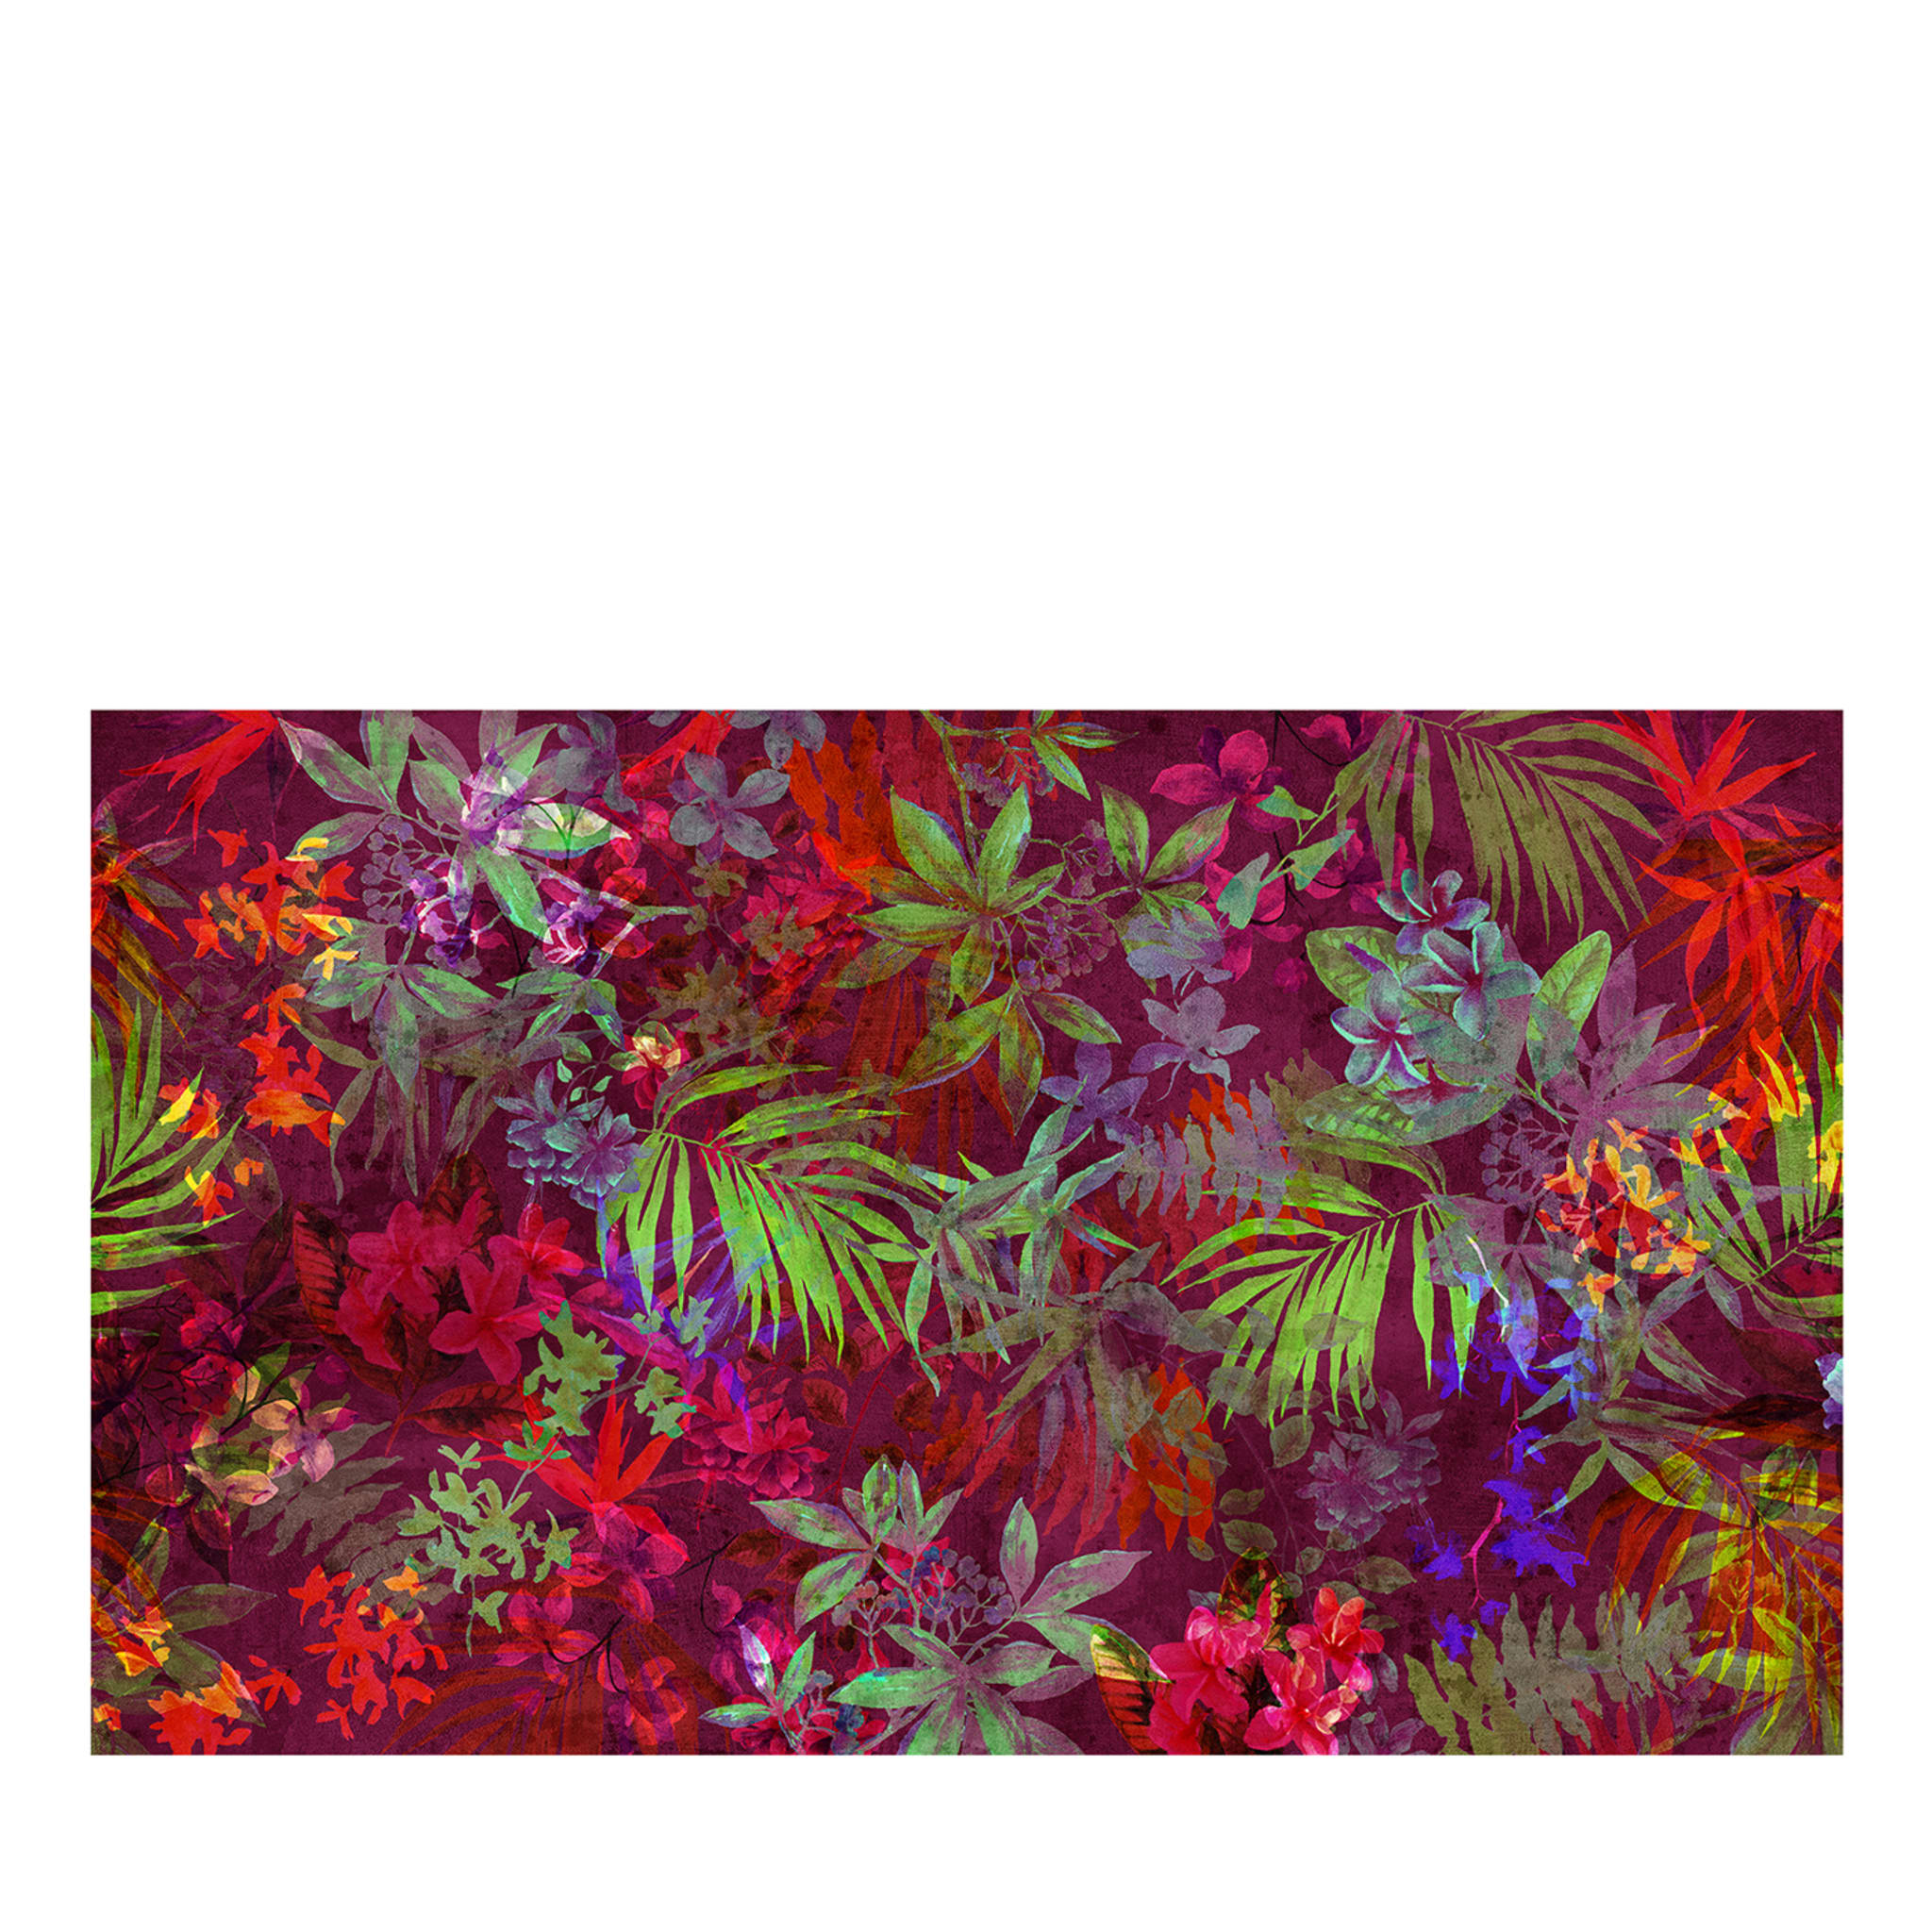 Rainforest by Alice carmen Goga wallpaper#1 - Main view